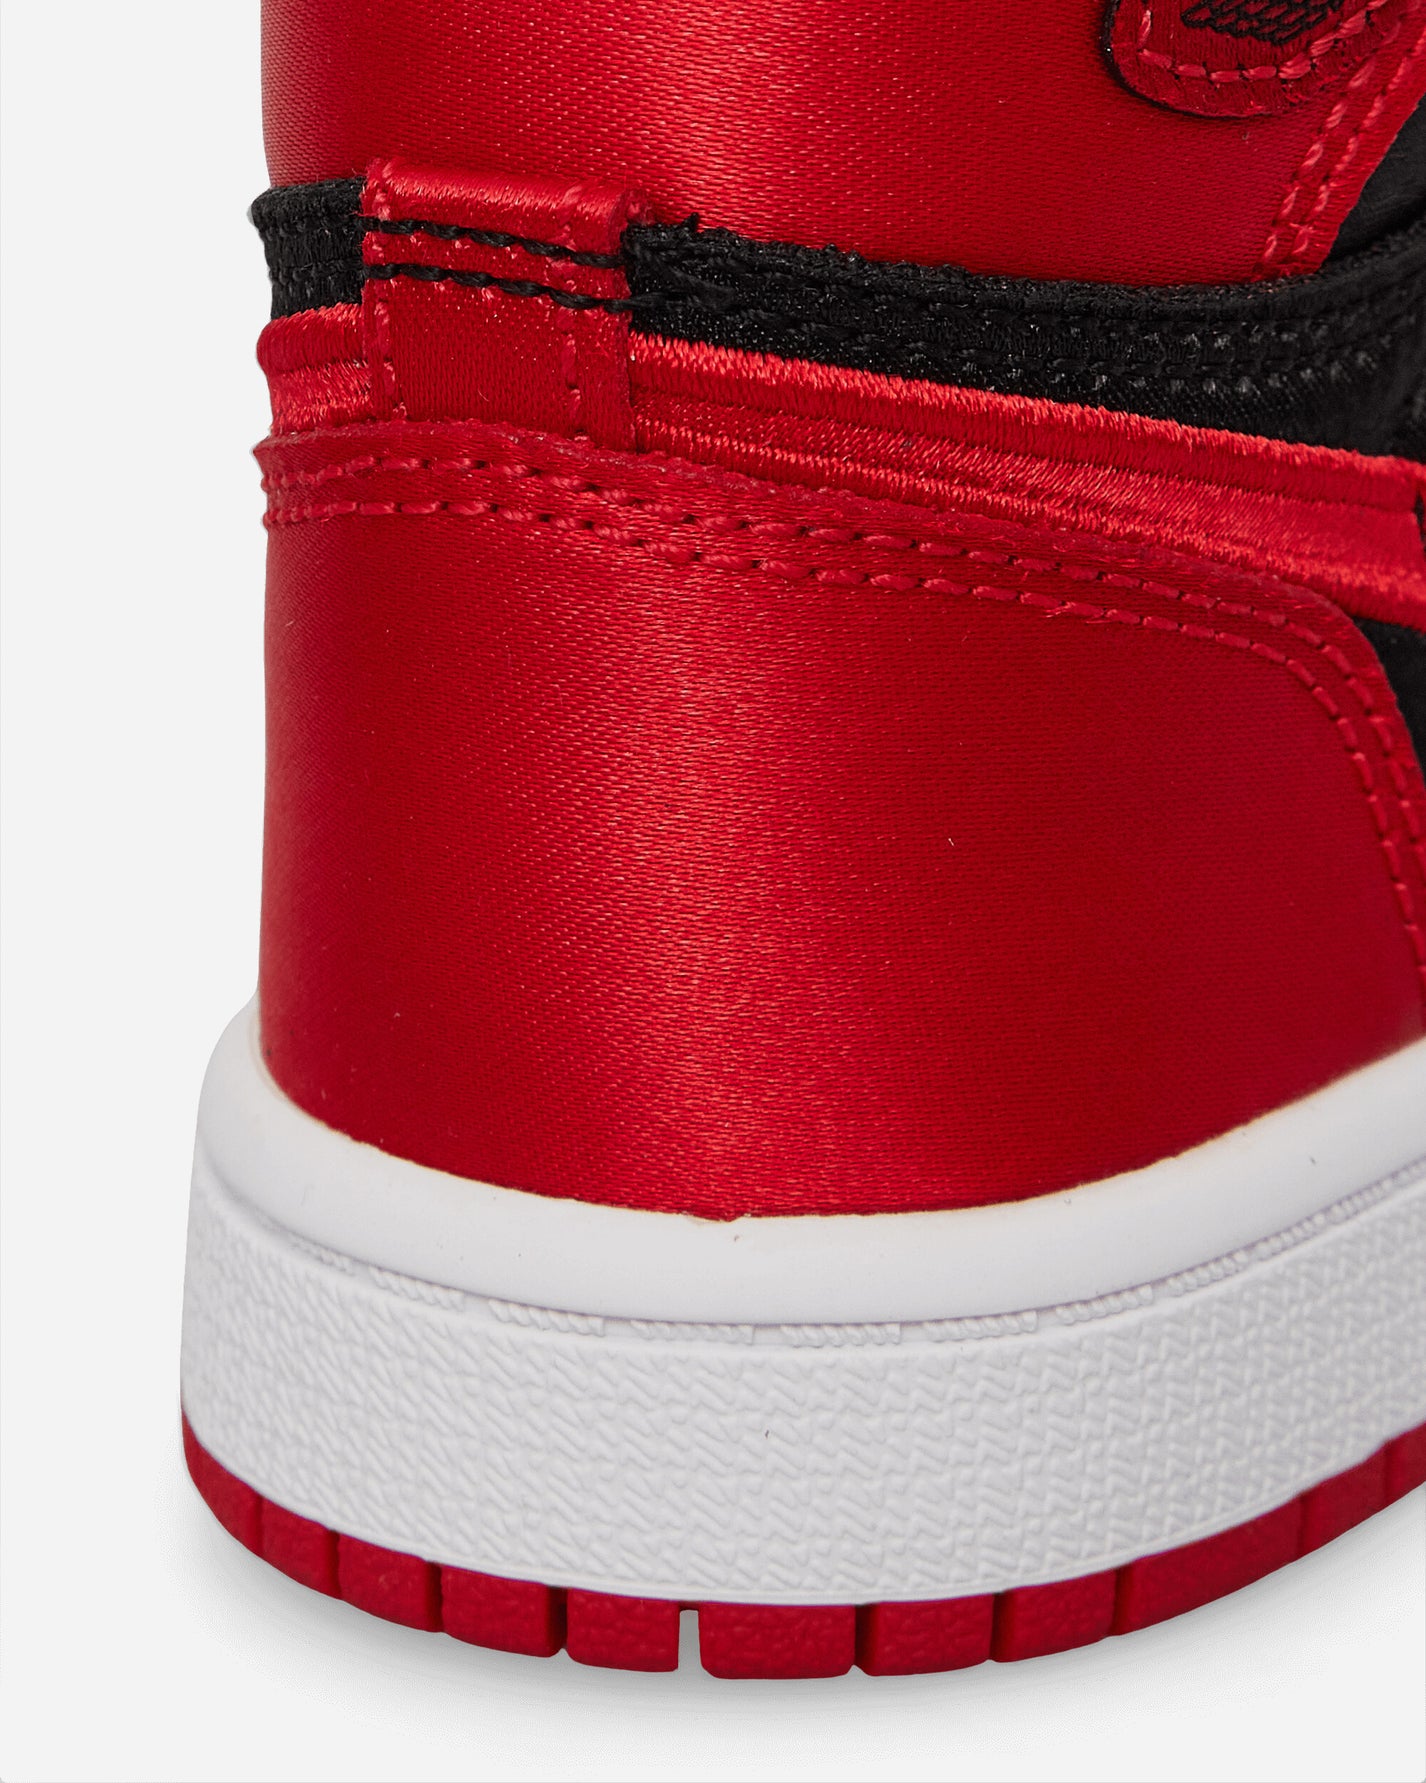 Nike Jordan Jordan 1 Retro High Og (Td) Black/University Red Sneakers High FD5305-061